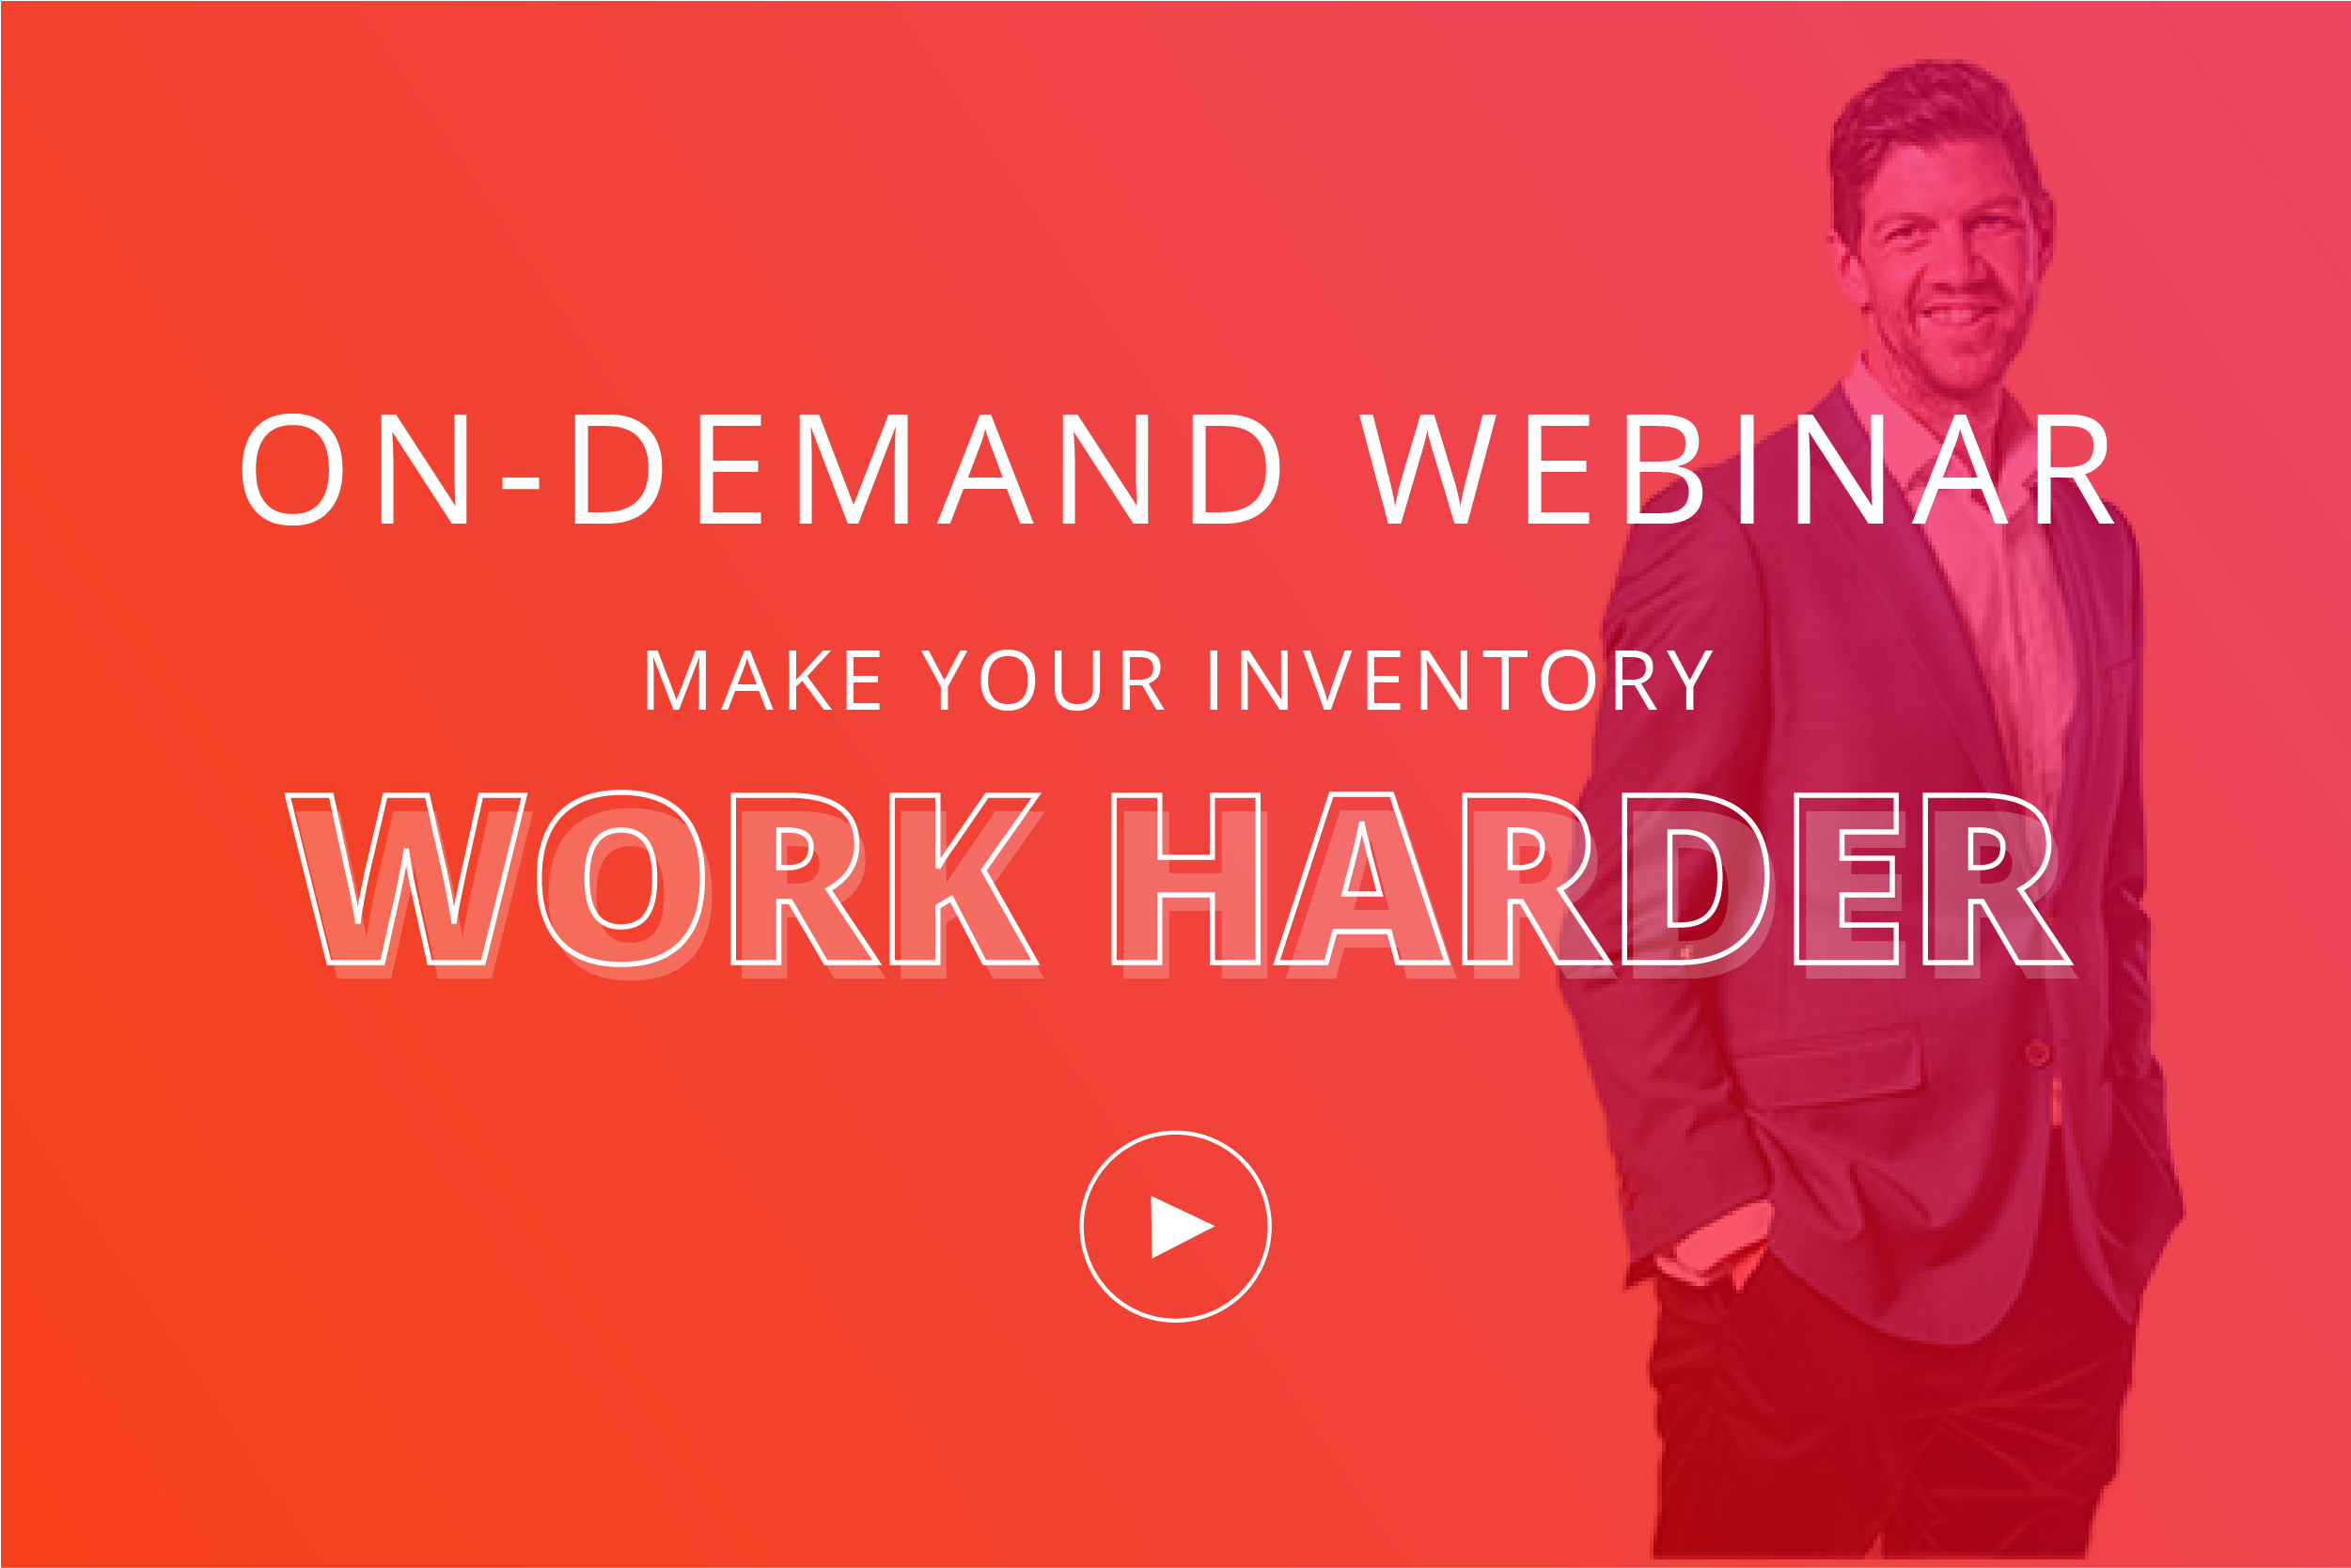 Make your inventory work harder webinar